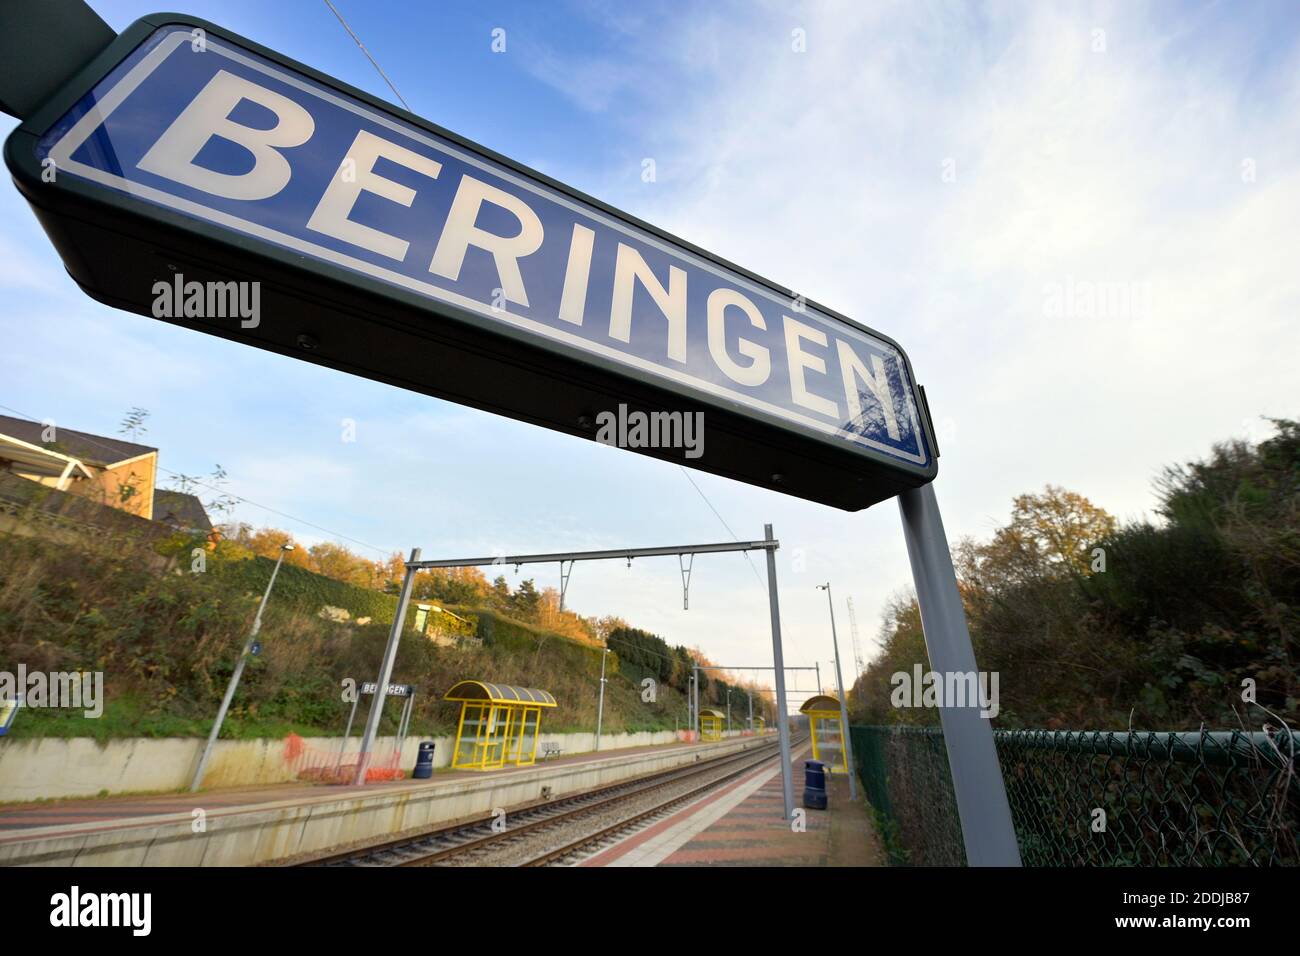 Illustration picture shows the train station of Beringen, Wednesday 25 November 2020. BELGA PHOTO YORICK JANSENS Stock Photo